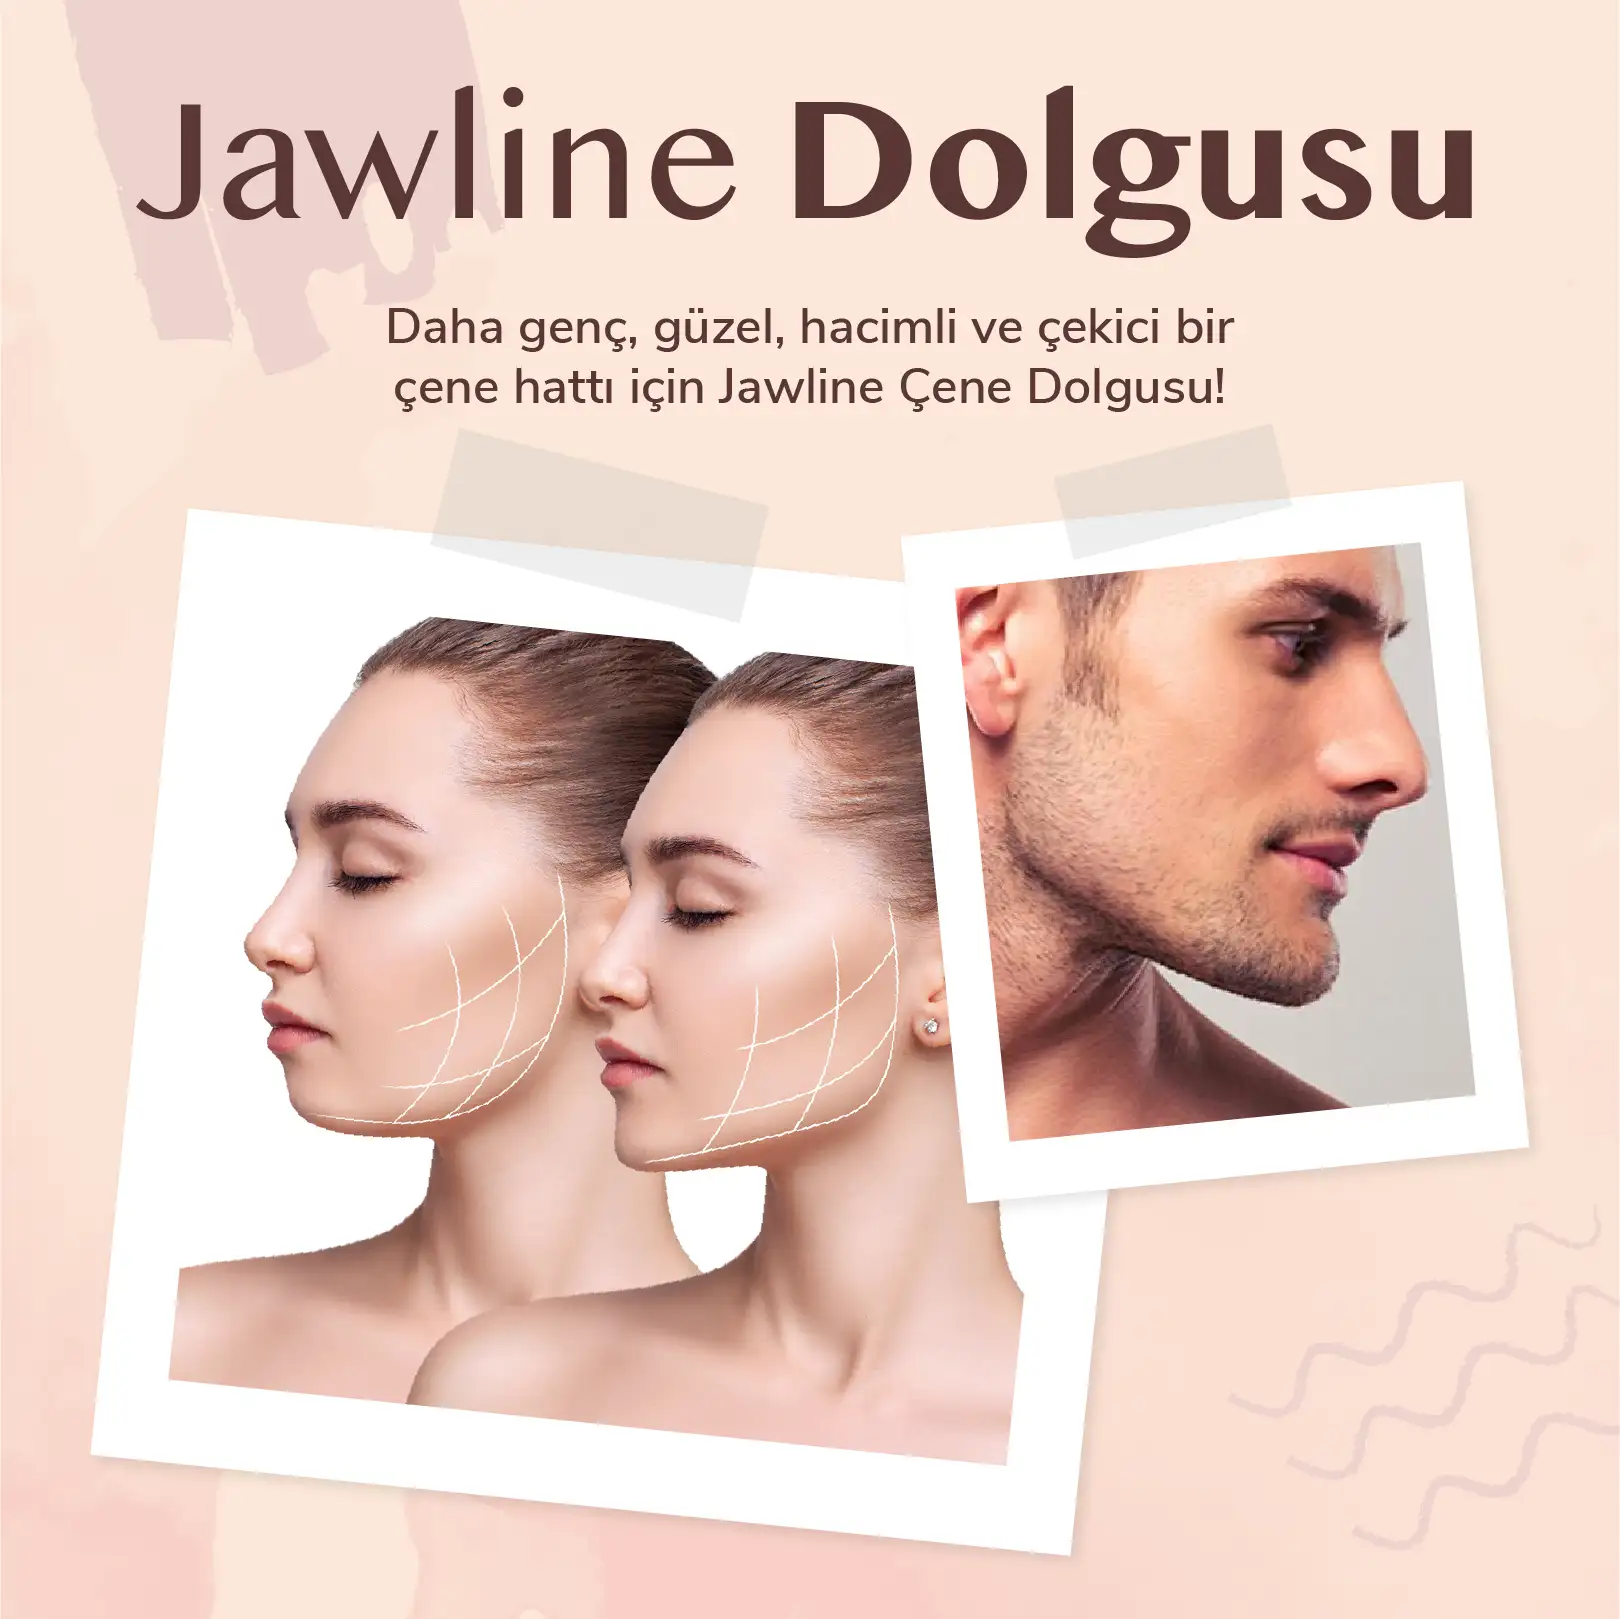 Jawline Dolgusu | Dr. Lida Çiteli